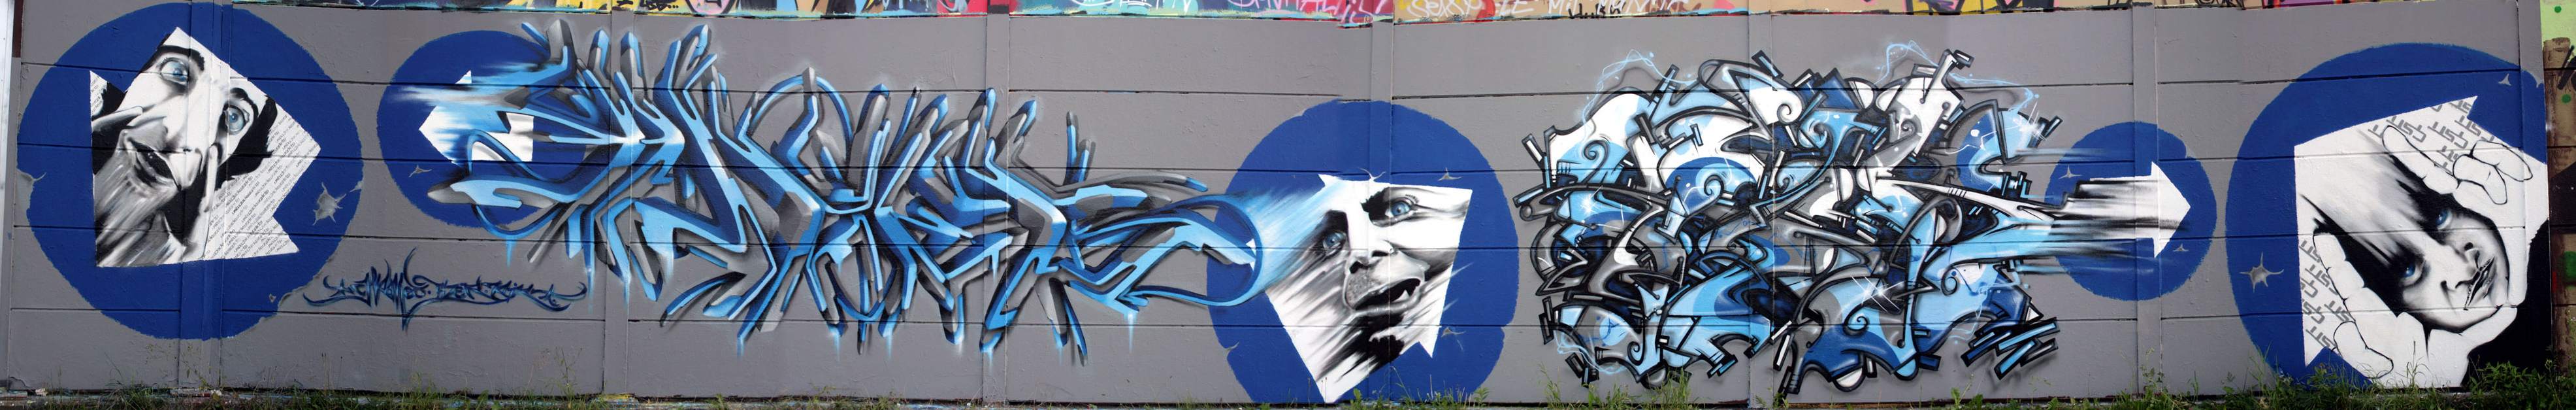 http://graffiti.org/clockwork/tizer_chromeo_luzern_schweiz_juni07.jpg